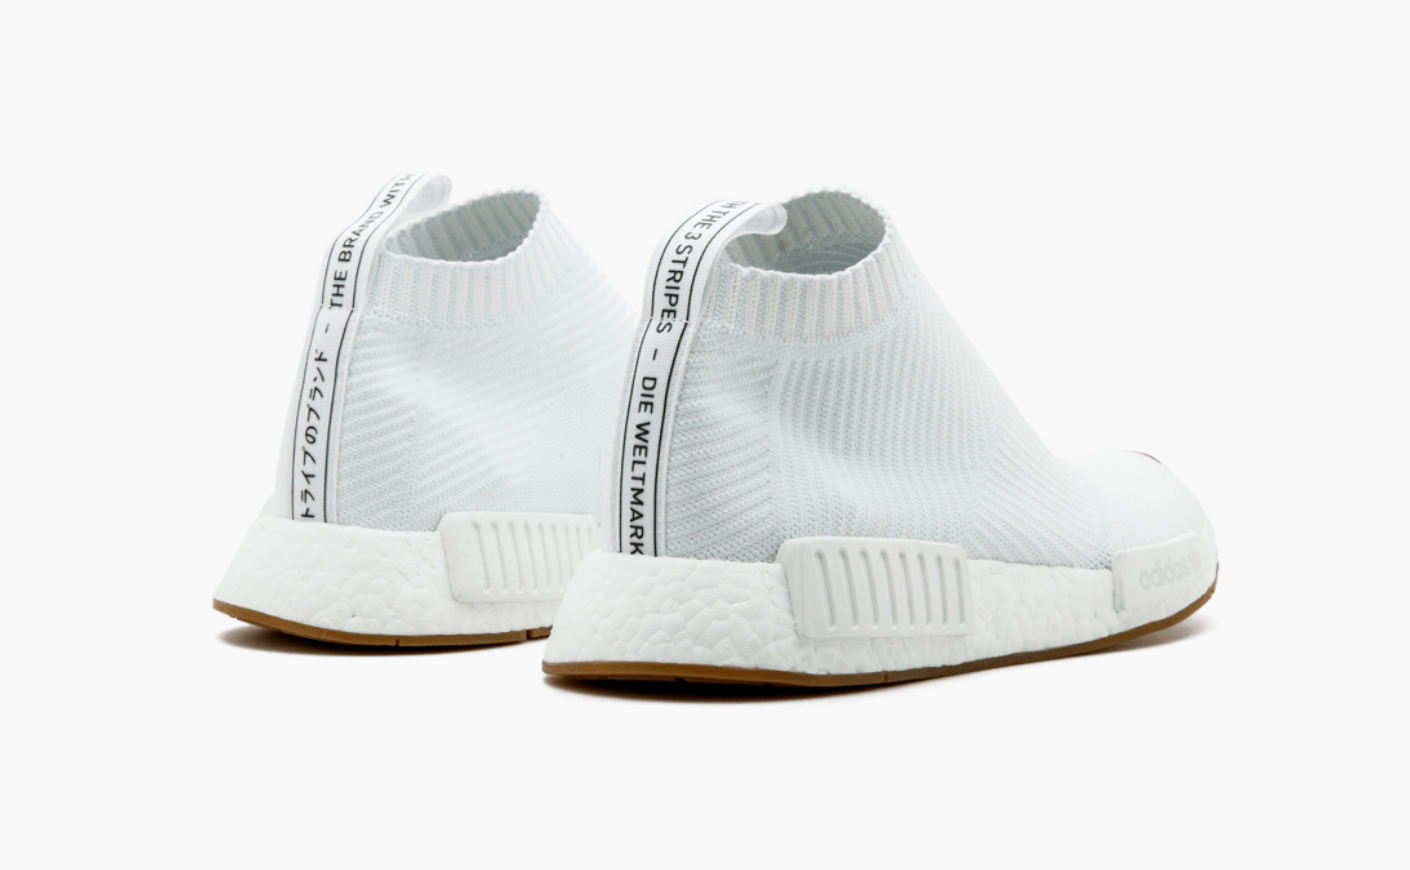 Adidas NMD Sock Primeknit White Sole – Kicks